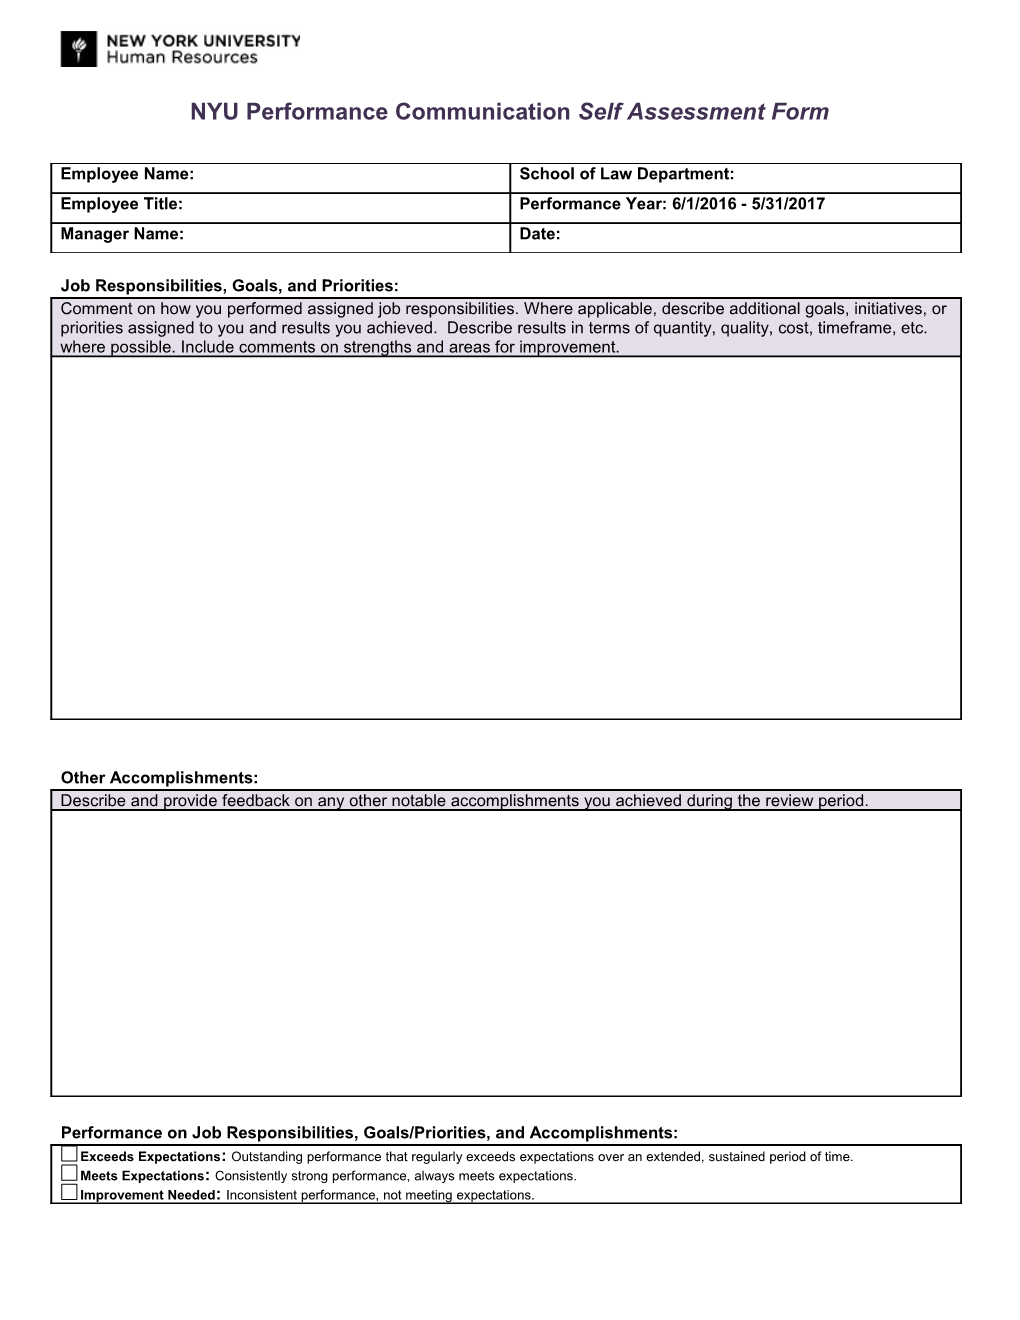 NYU Performance Communicationself Assessment Form